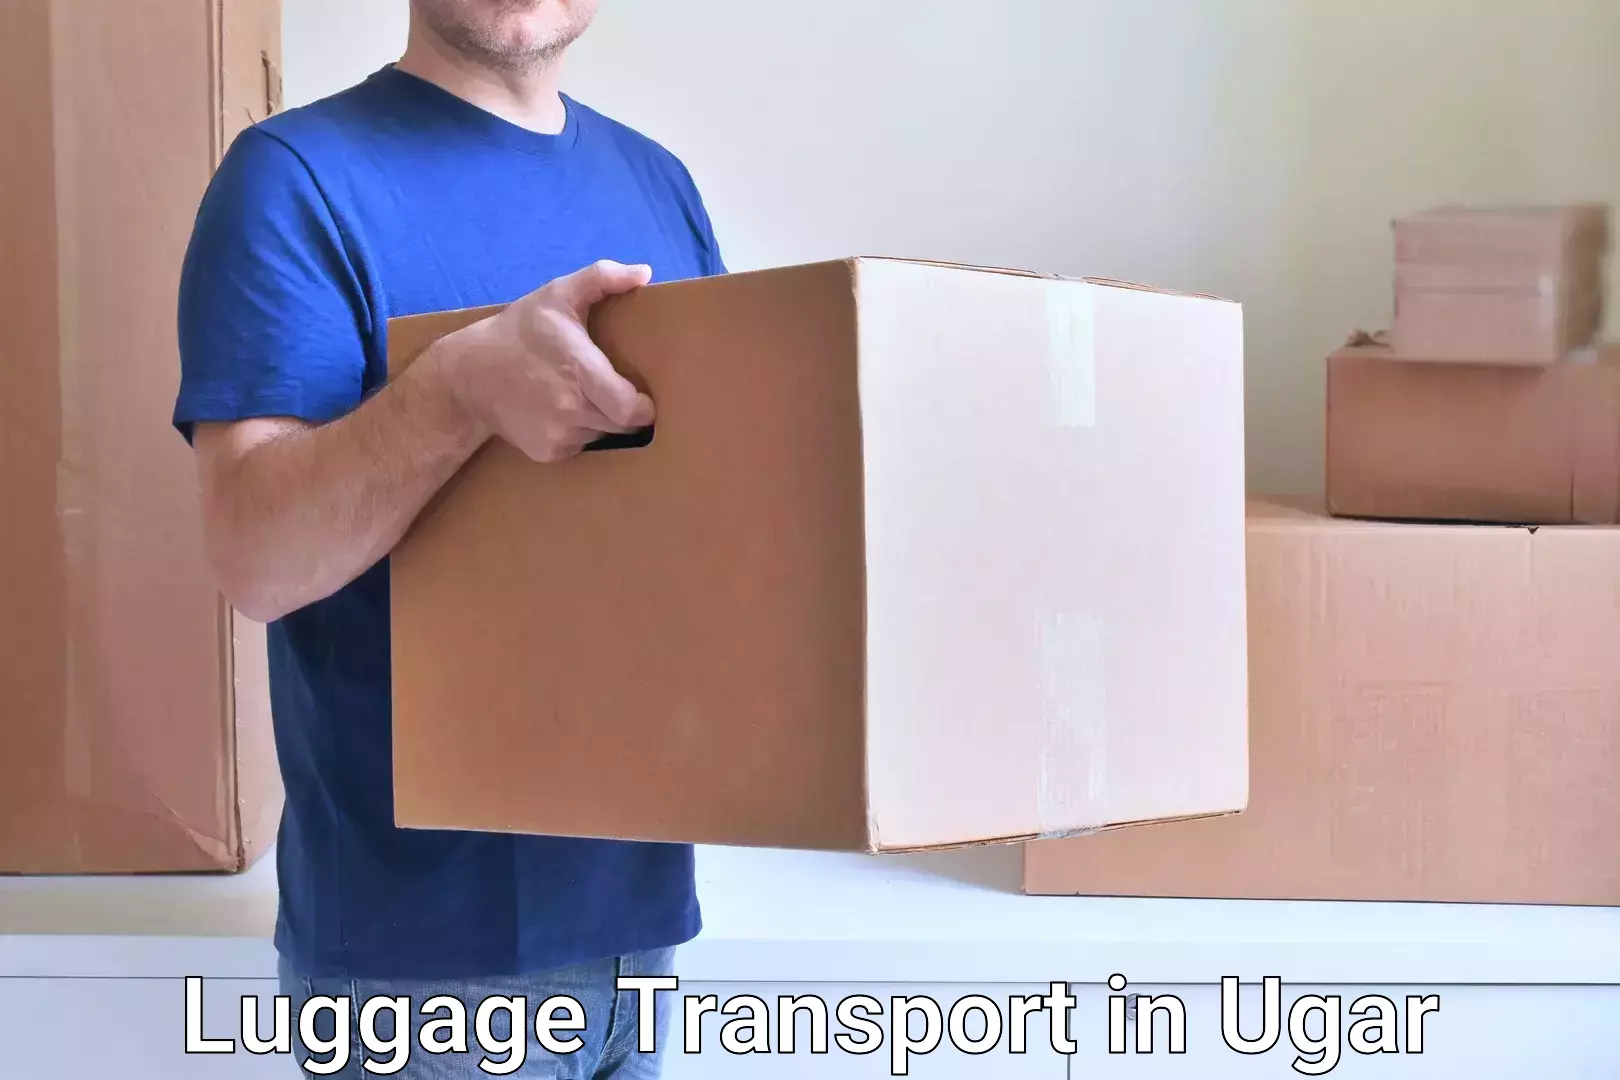 Professional baggage transport in Ugar